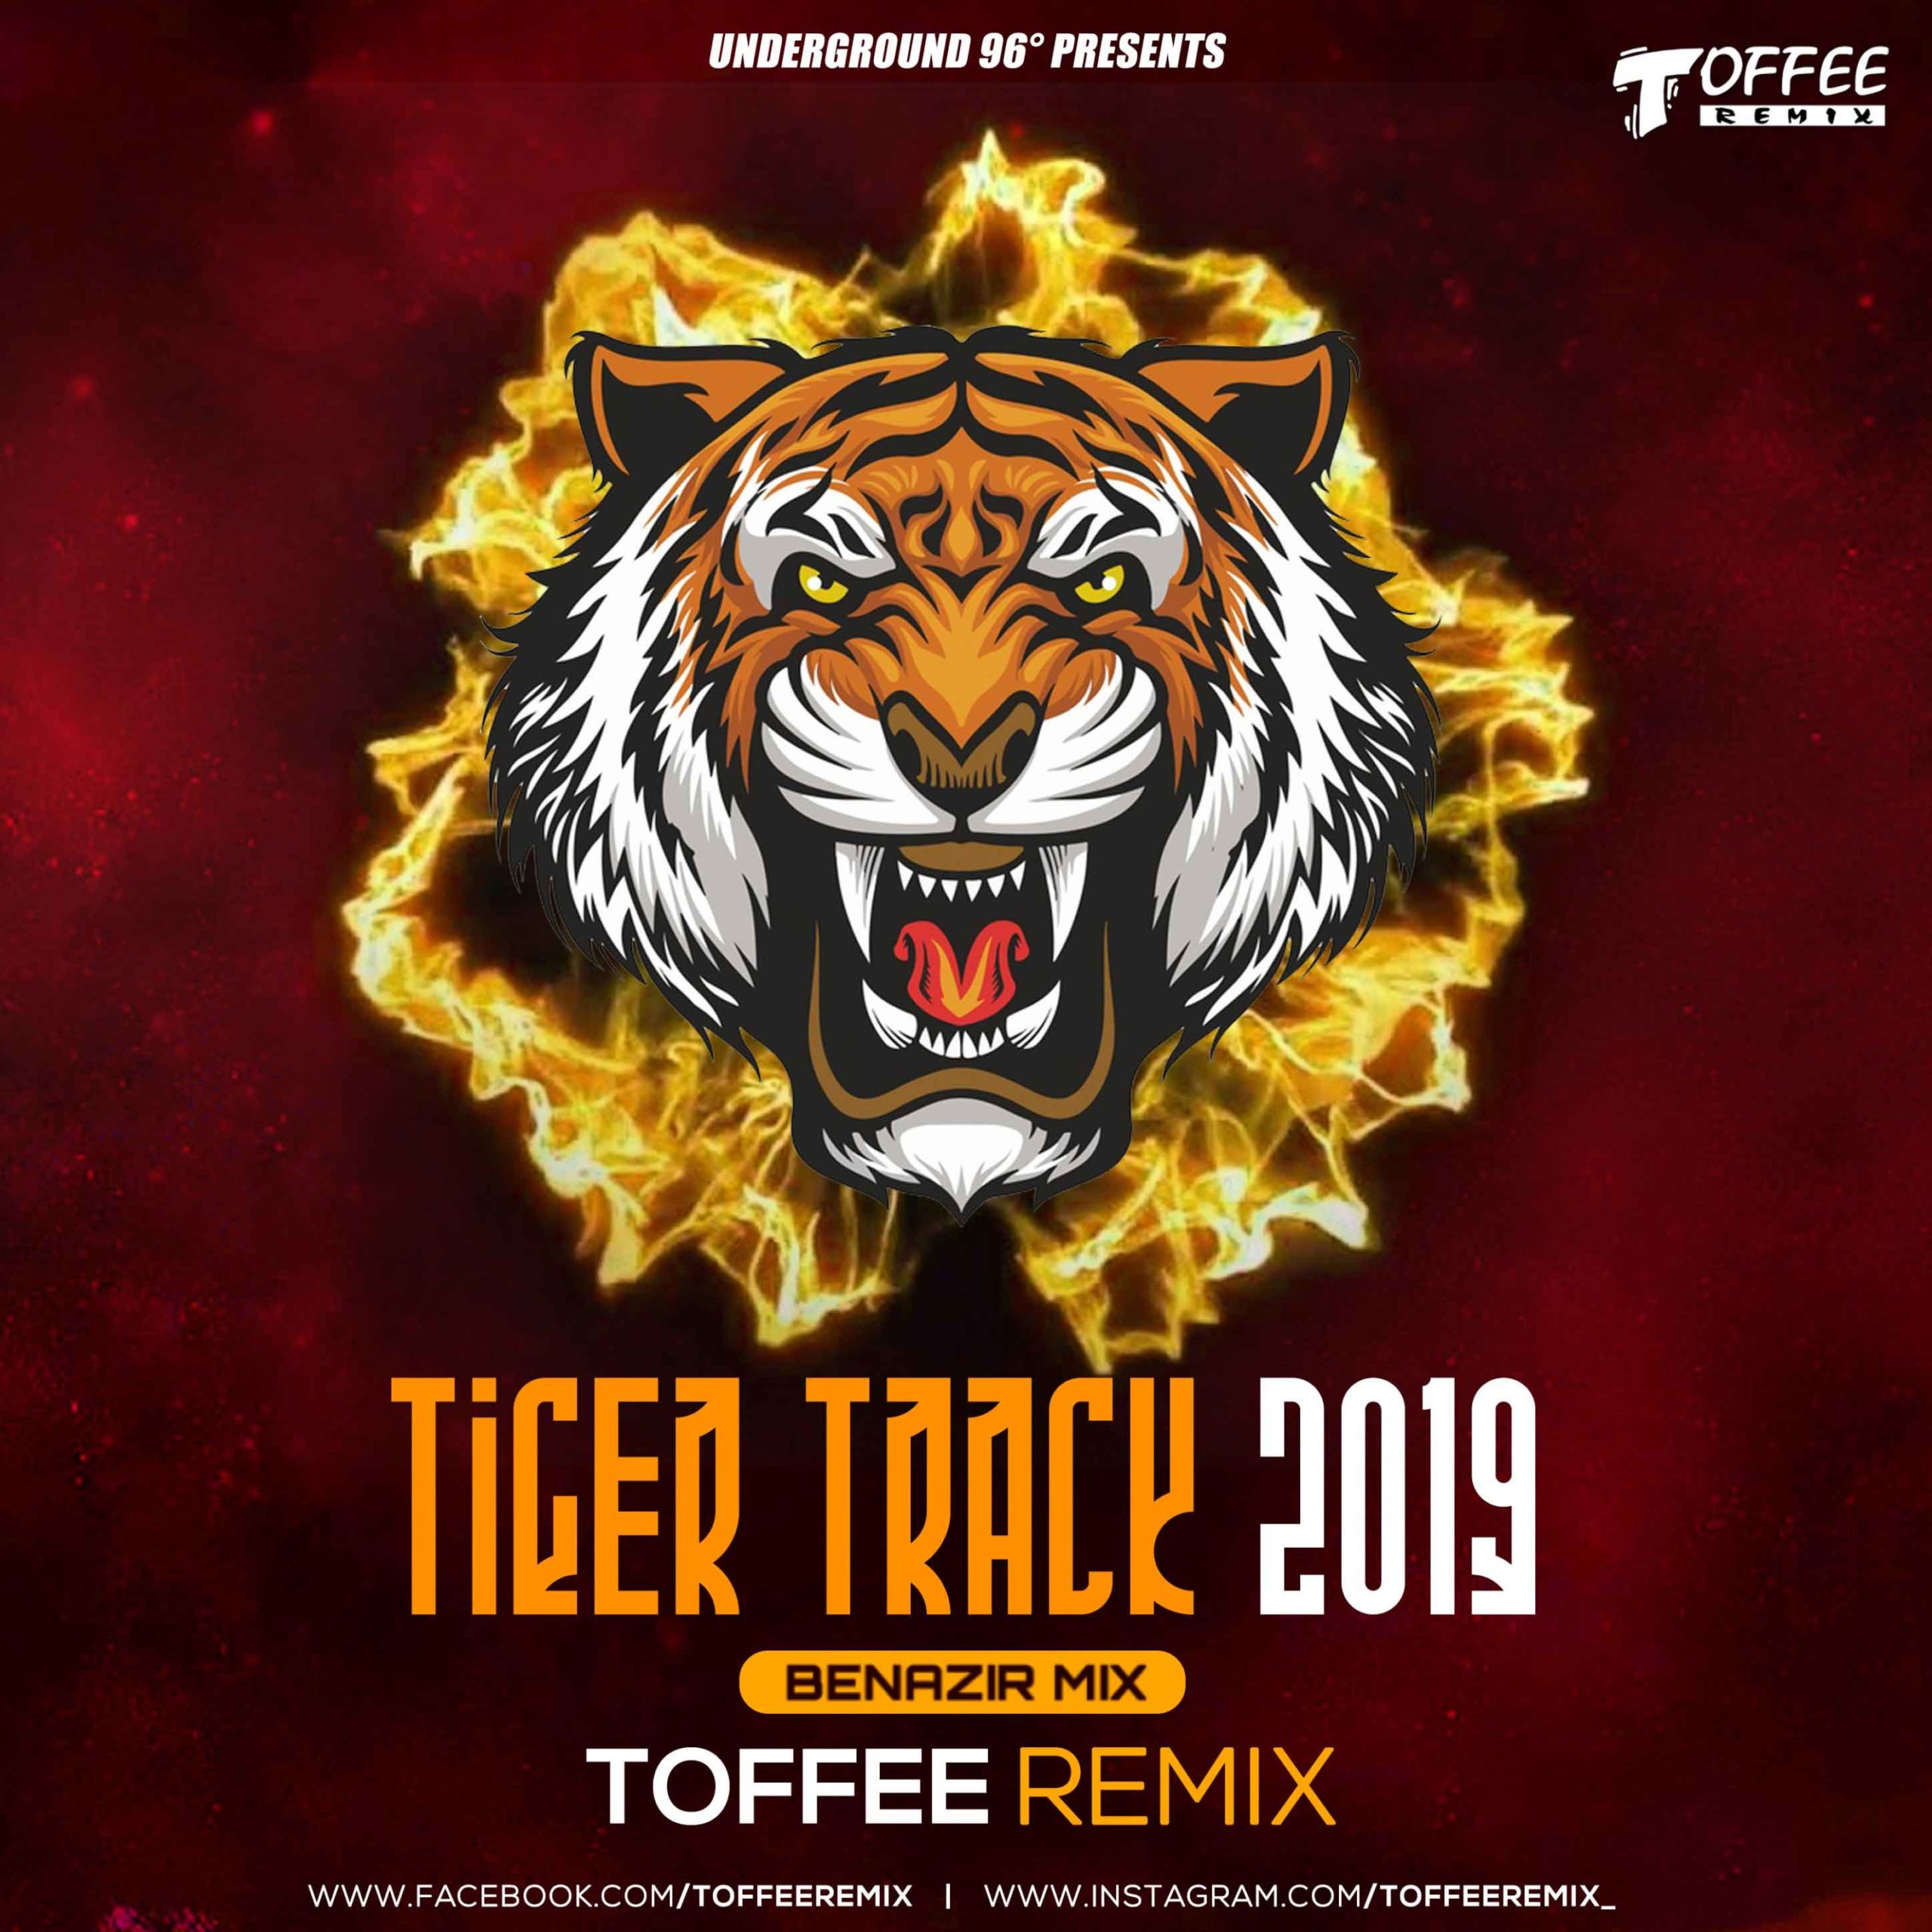 Edm Music Tiger Track 2020 (Benazir Mix) - Toffee Remix